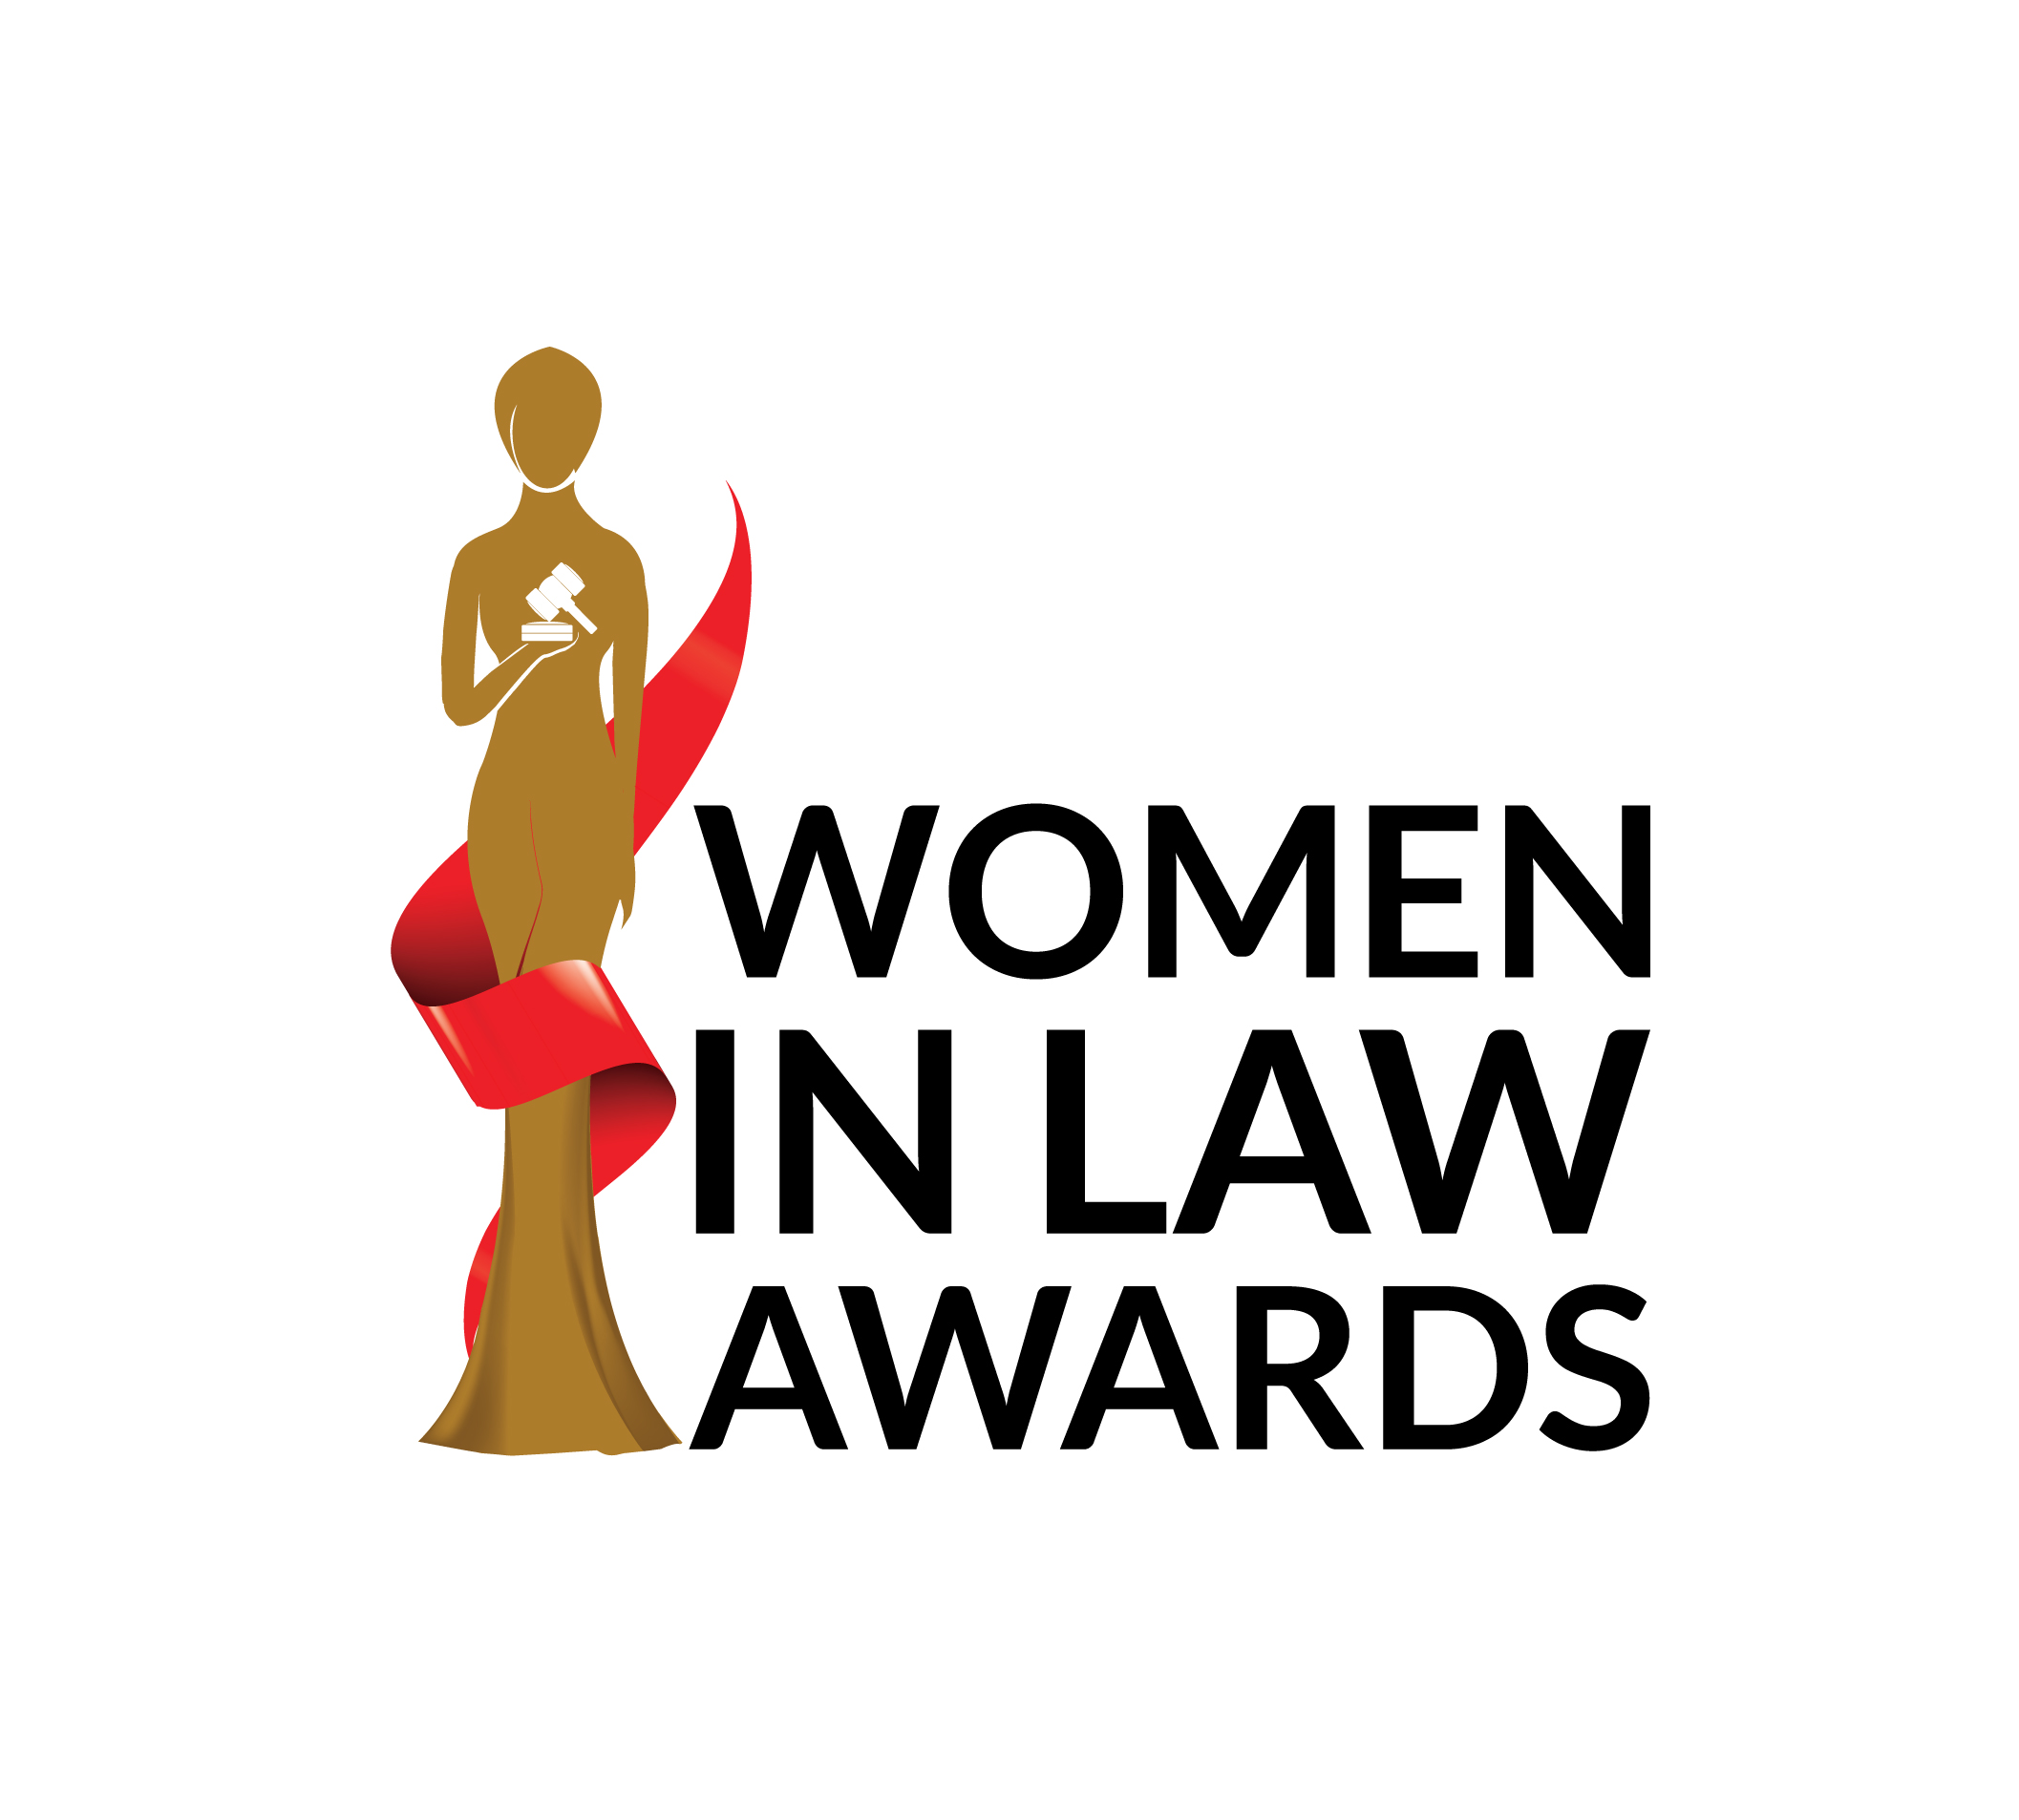 Meet the Sponsors of the LexisNexis Women in Law Awards!